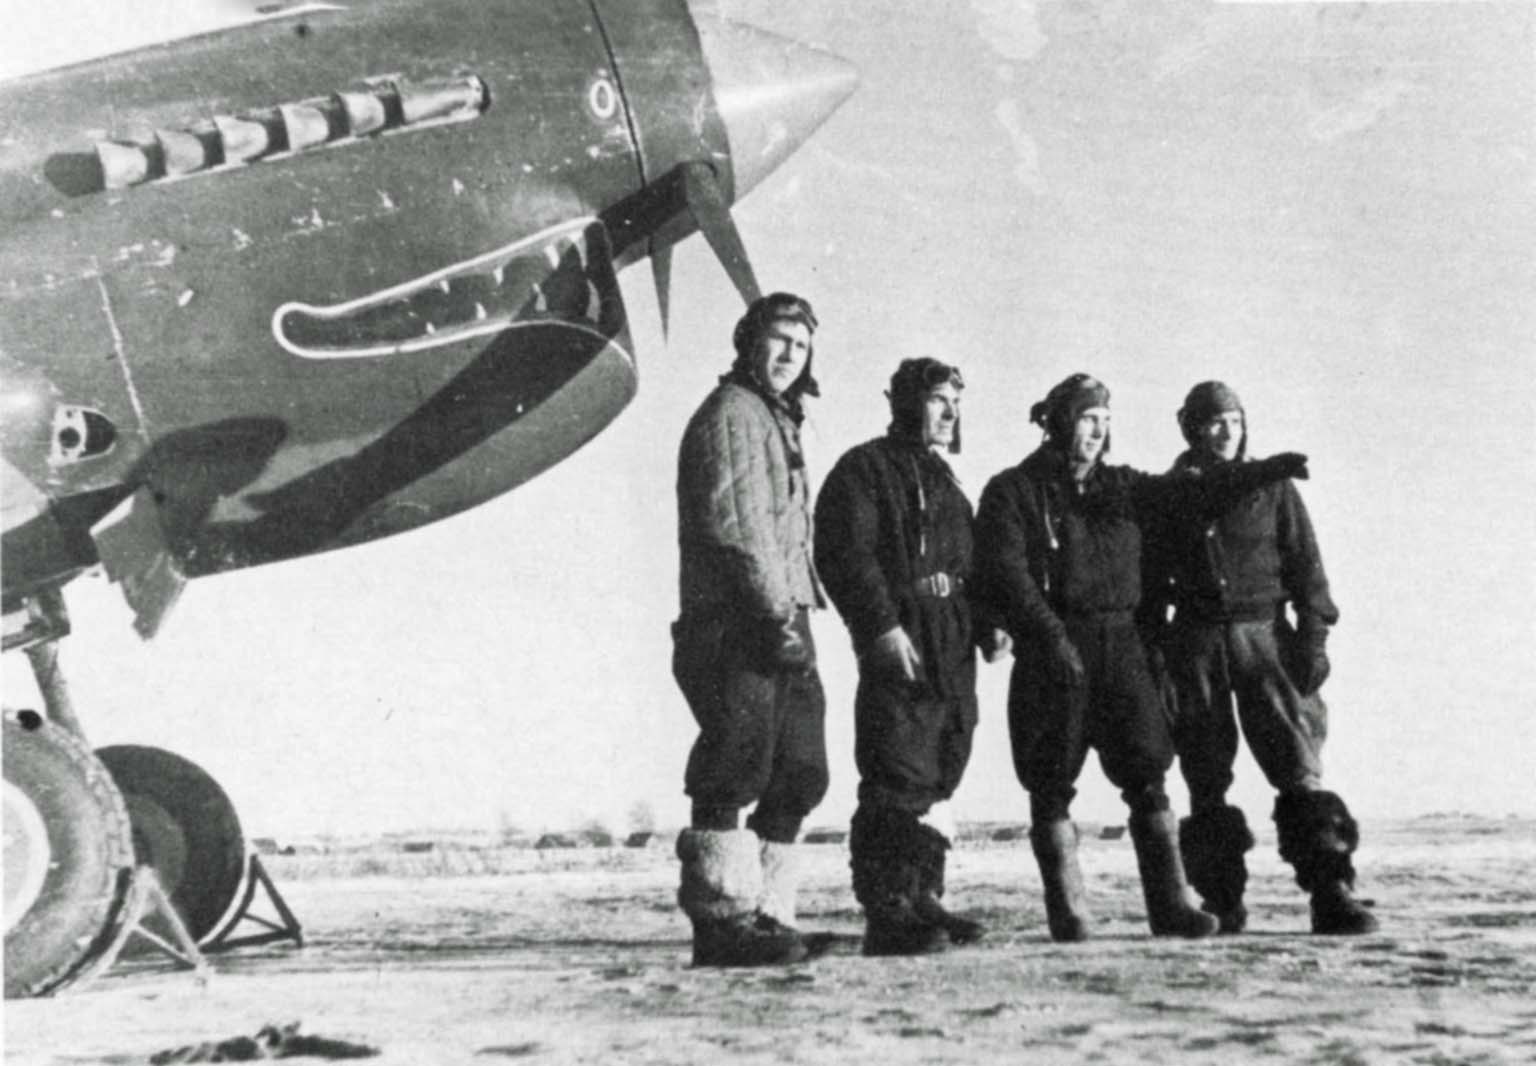 Soviet pilots, P-40 fighter